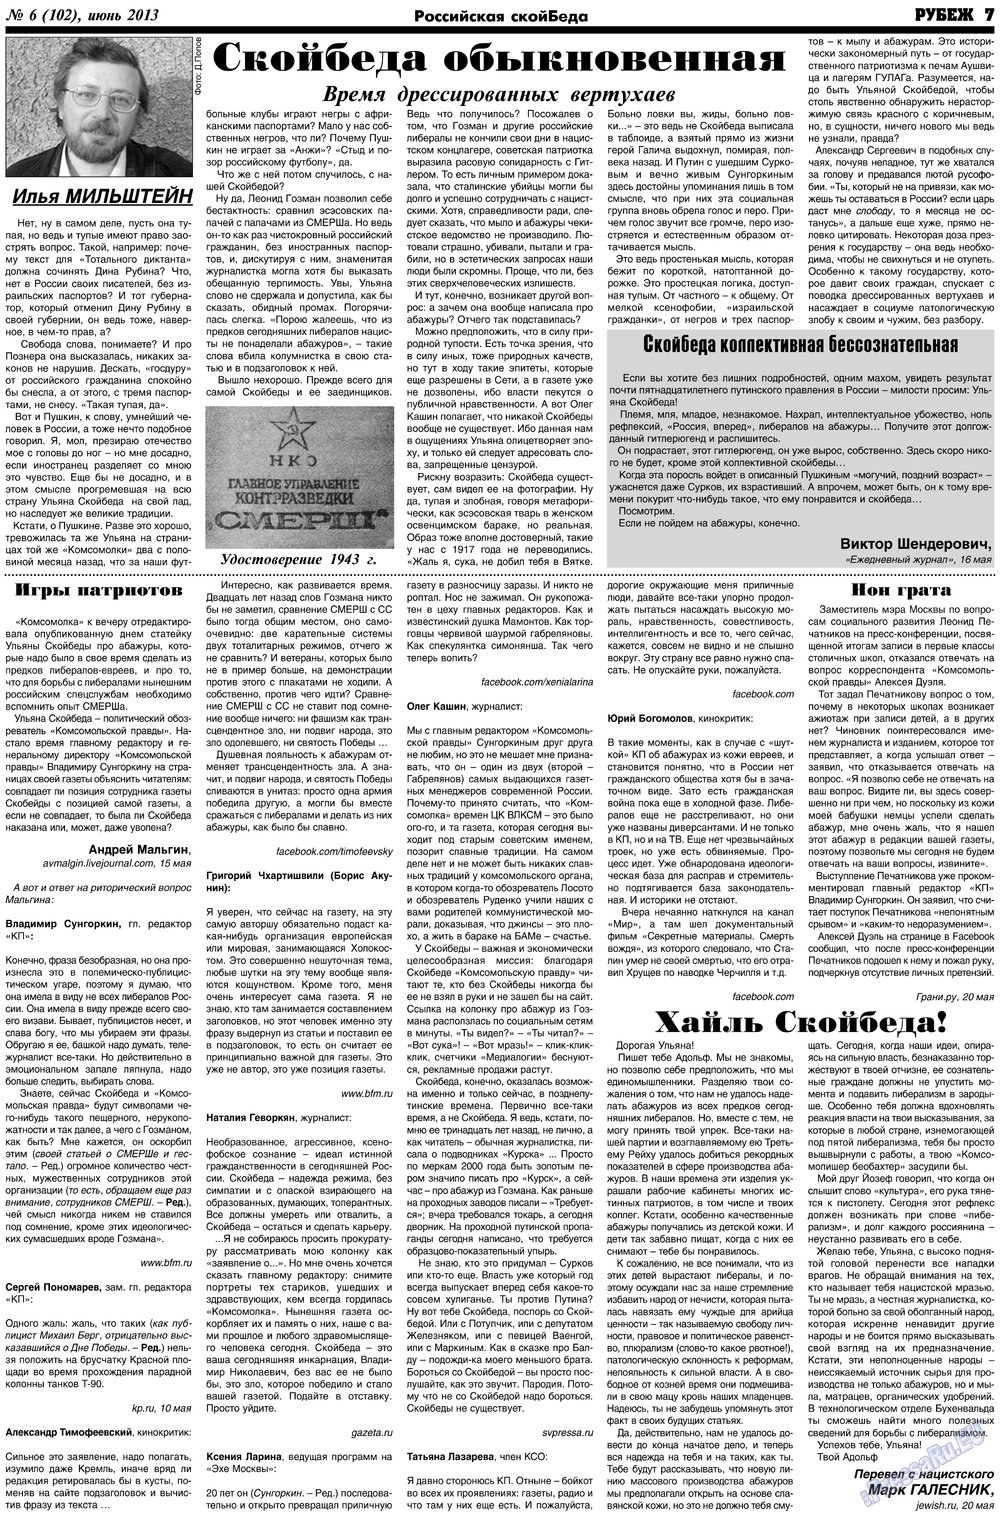 Рубеж, газета. 2013 №6 стр.7